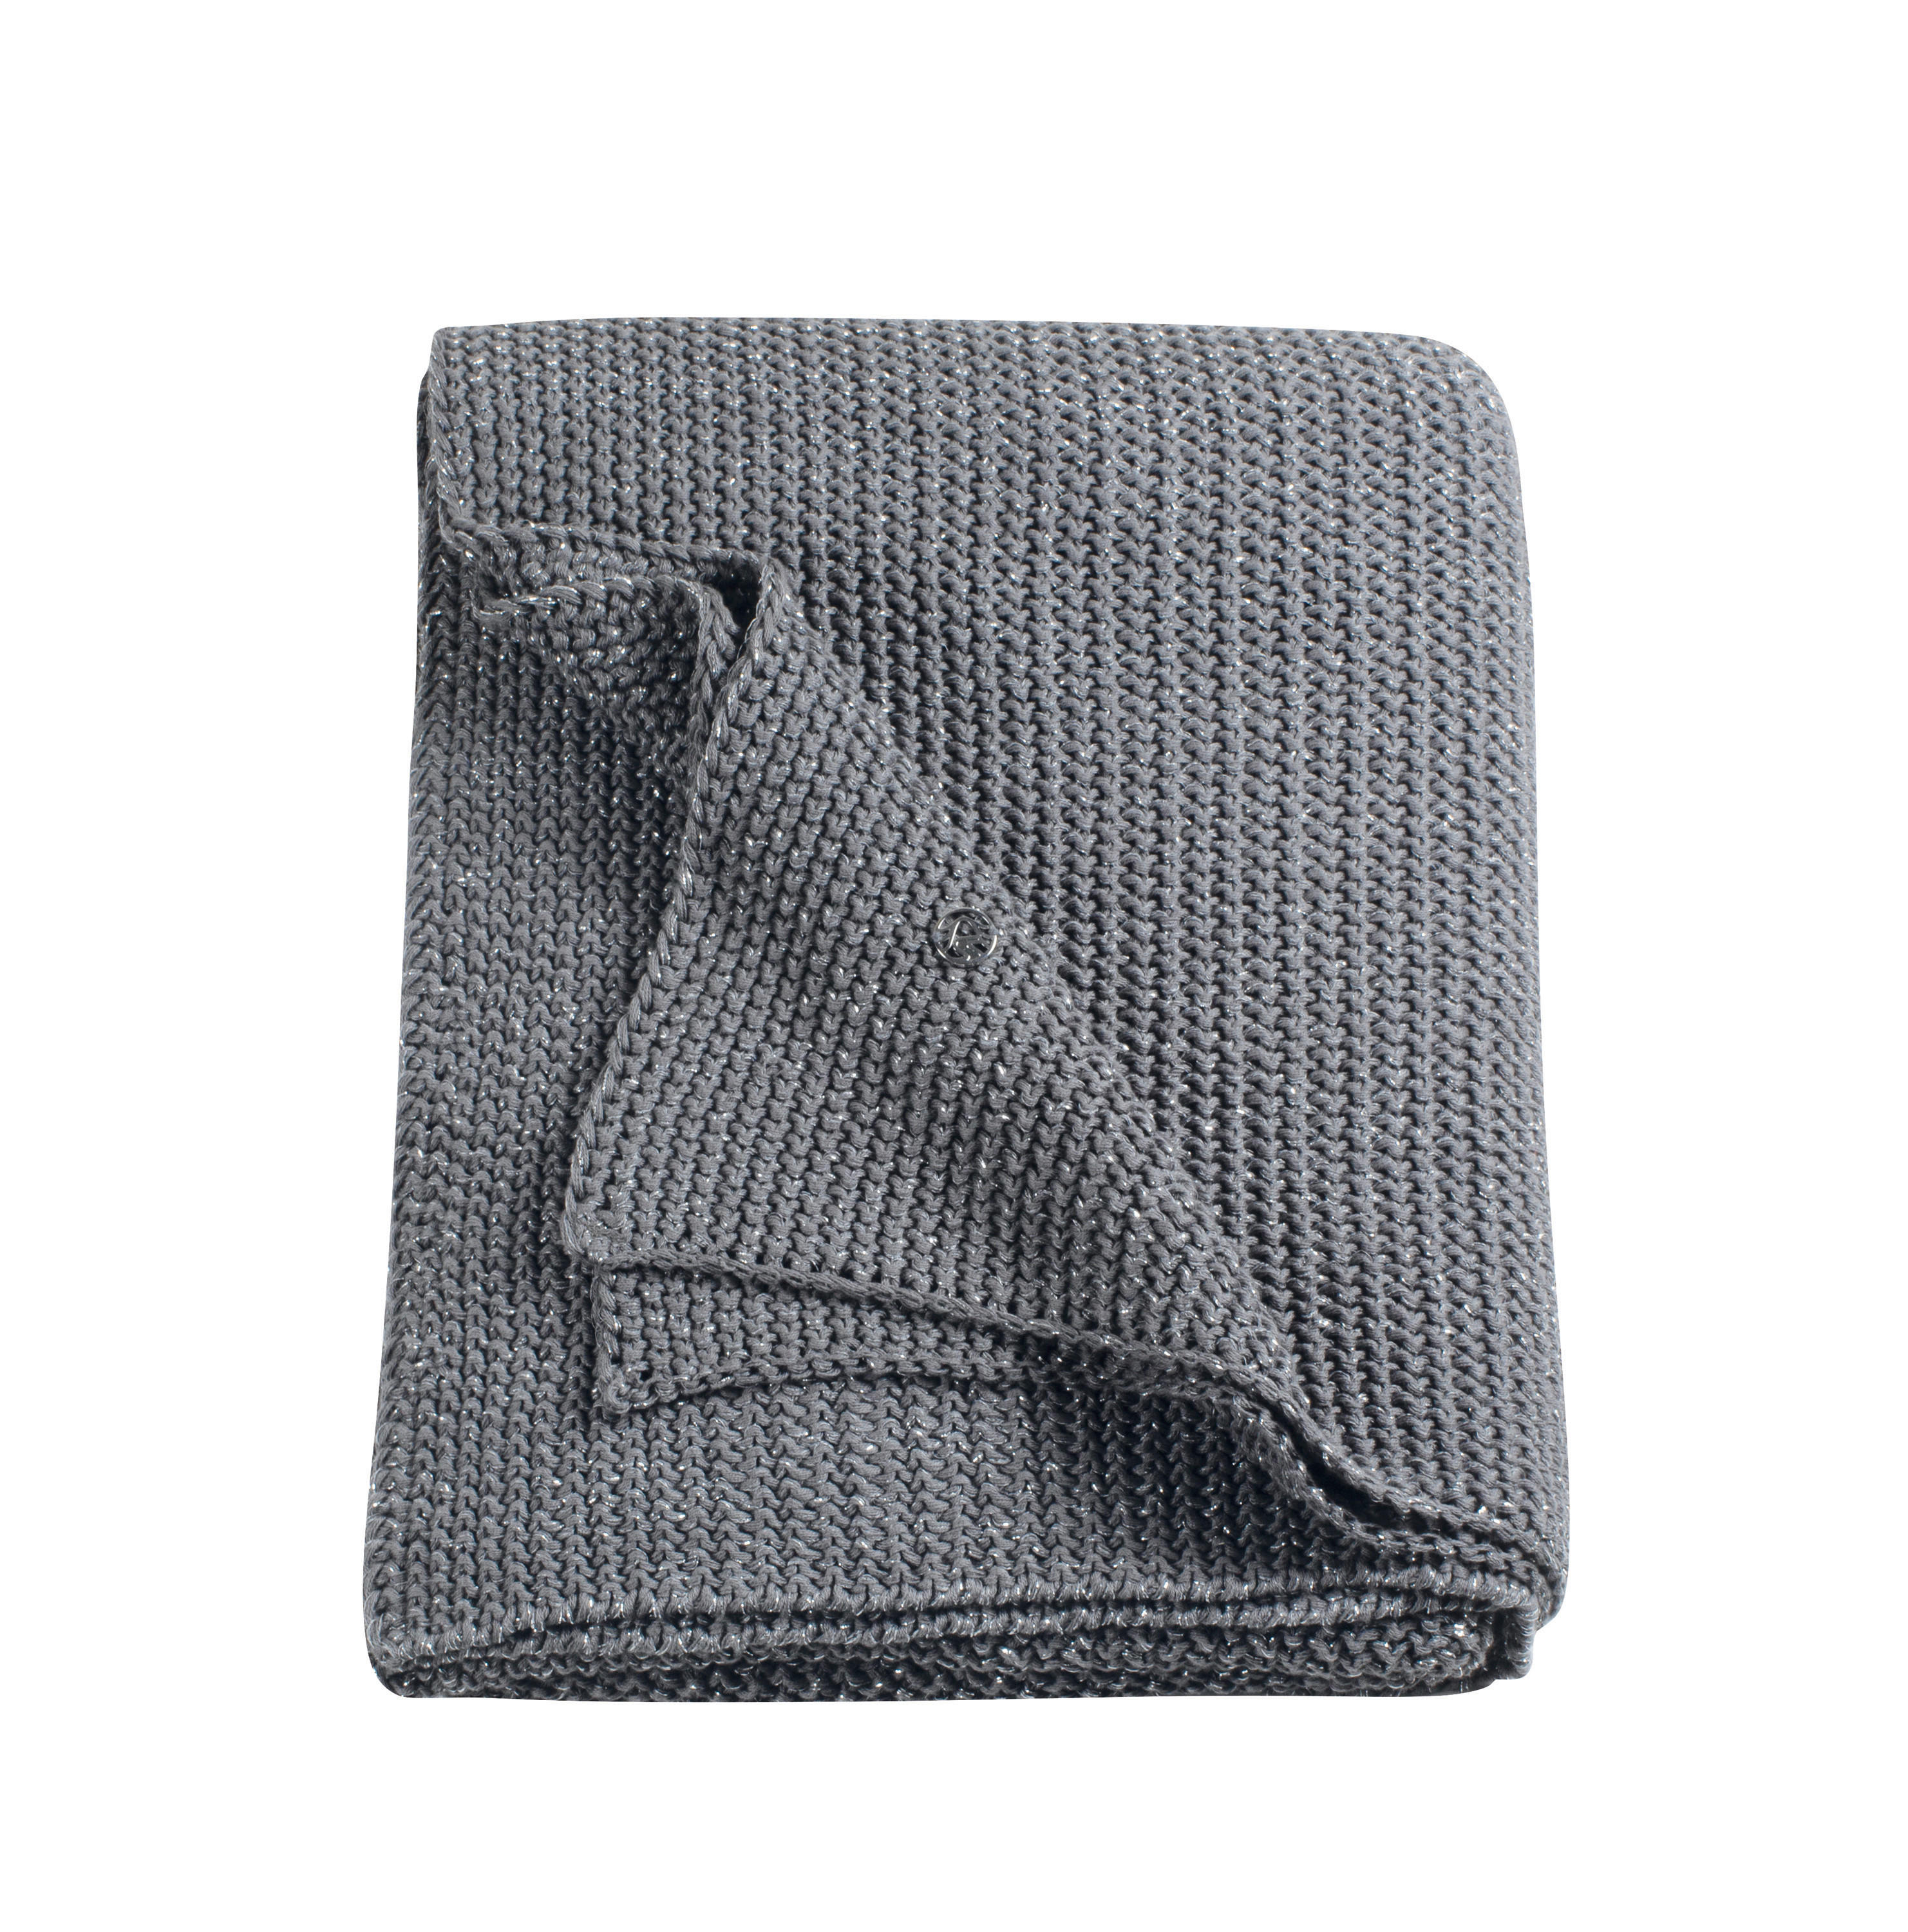 PLAID Softskills 130/170 cm  - Grau, Design, Textil (130/170cm) - Sportalm Kitzbühel